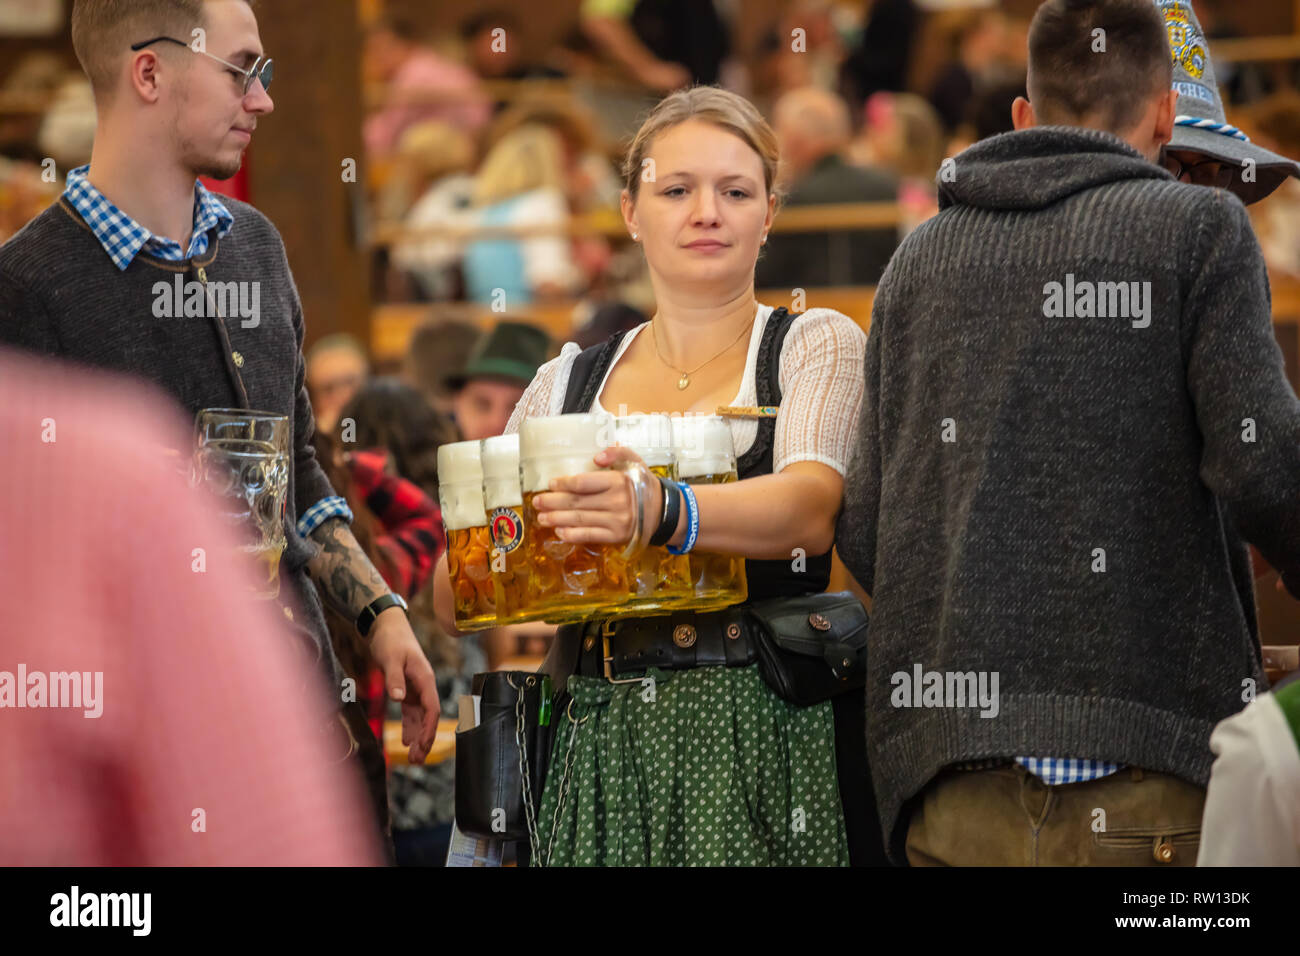 Oktoberfest waitress hi-res stock photography and images - Alamy